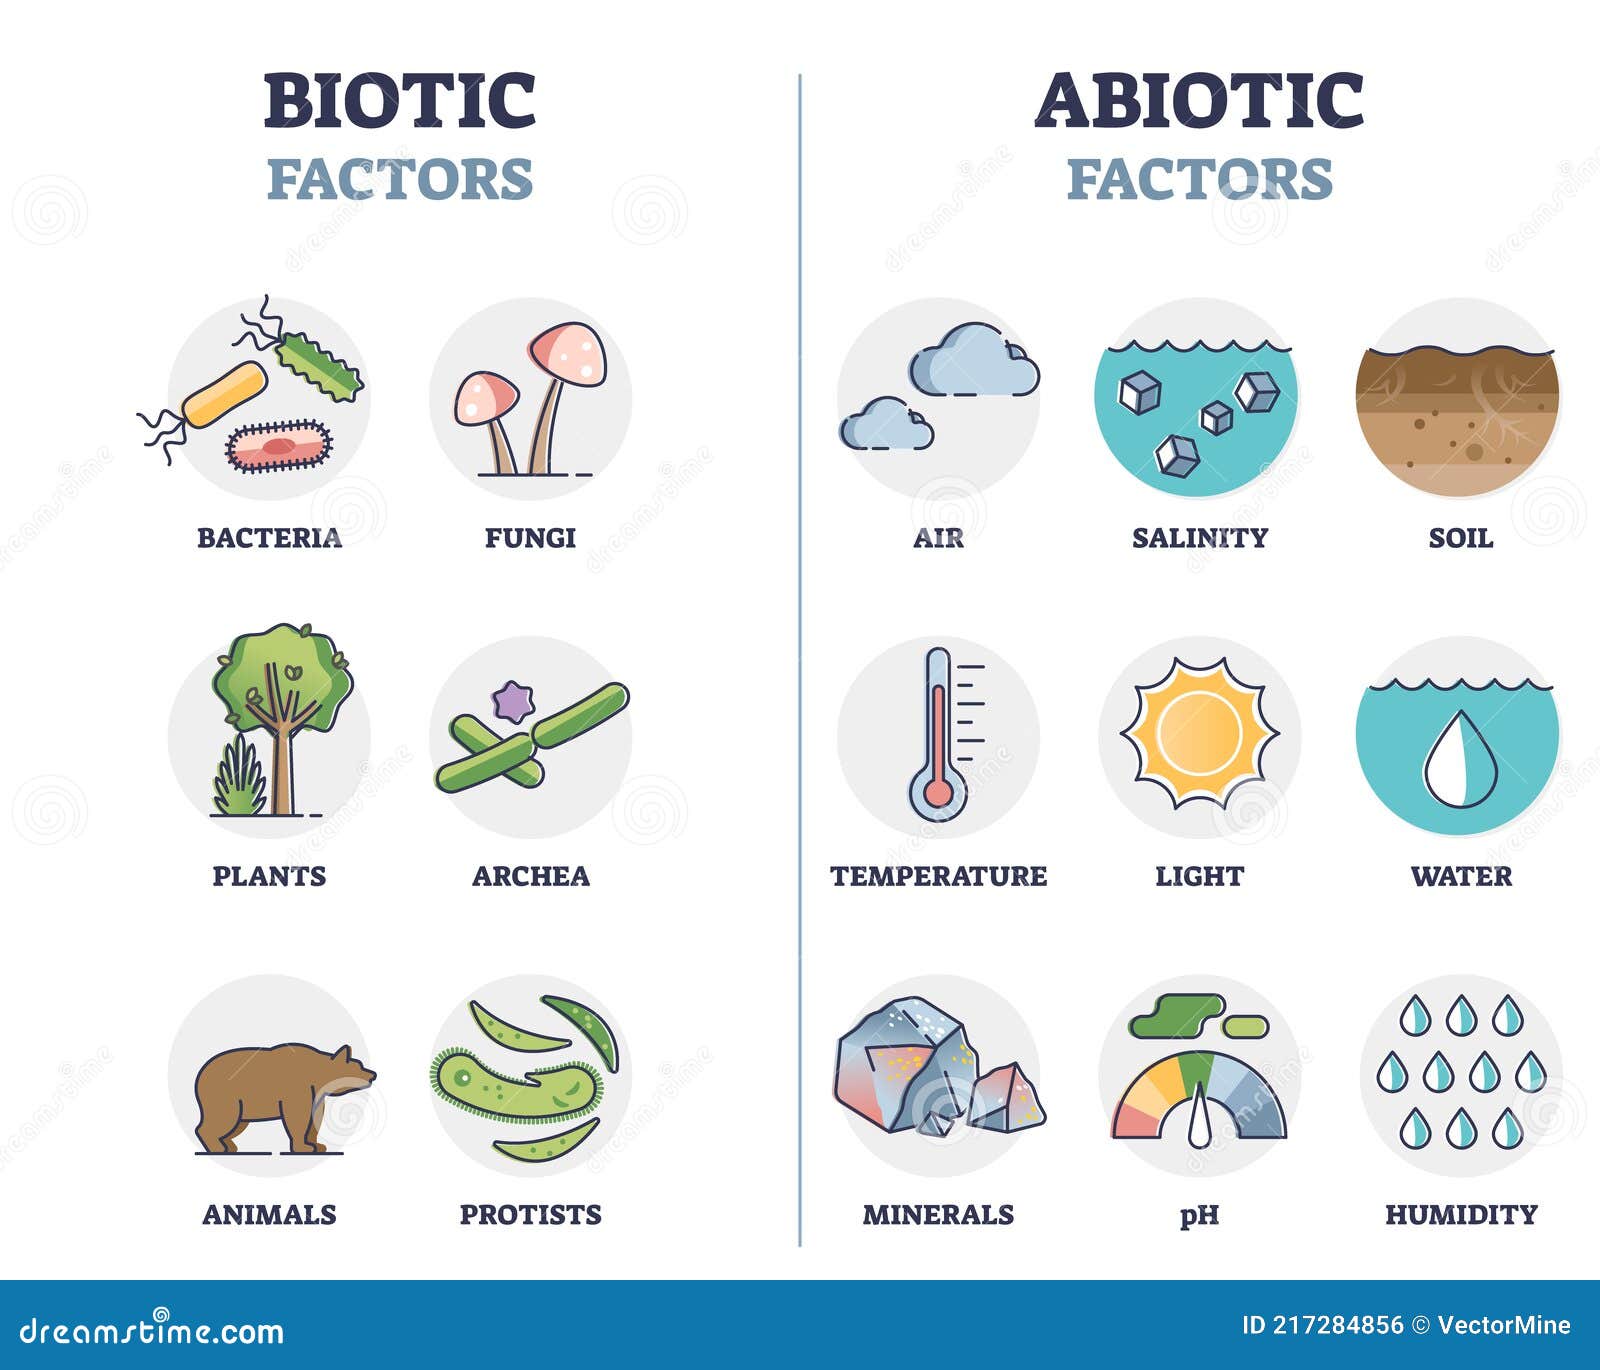 biotic and abiotic factors as biological s division outline diagram